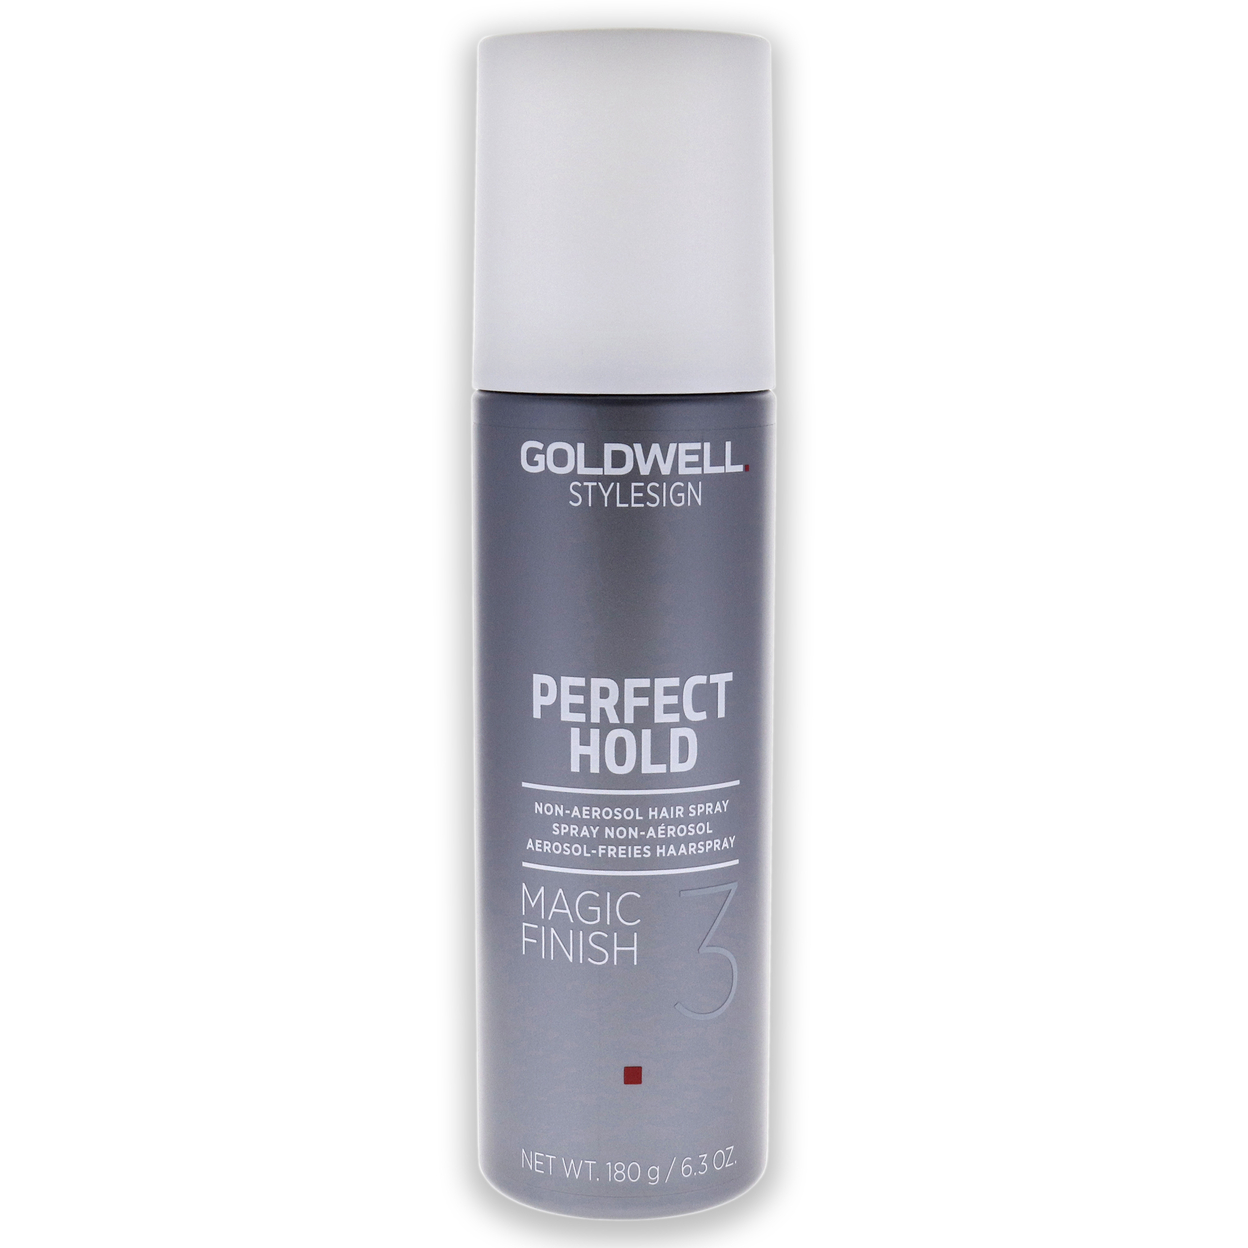 Goldwell Stylesign Perfect Hold Magic Finish Non - Aerosol Hair Spray 6.3 Oz